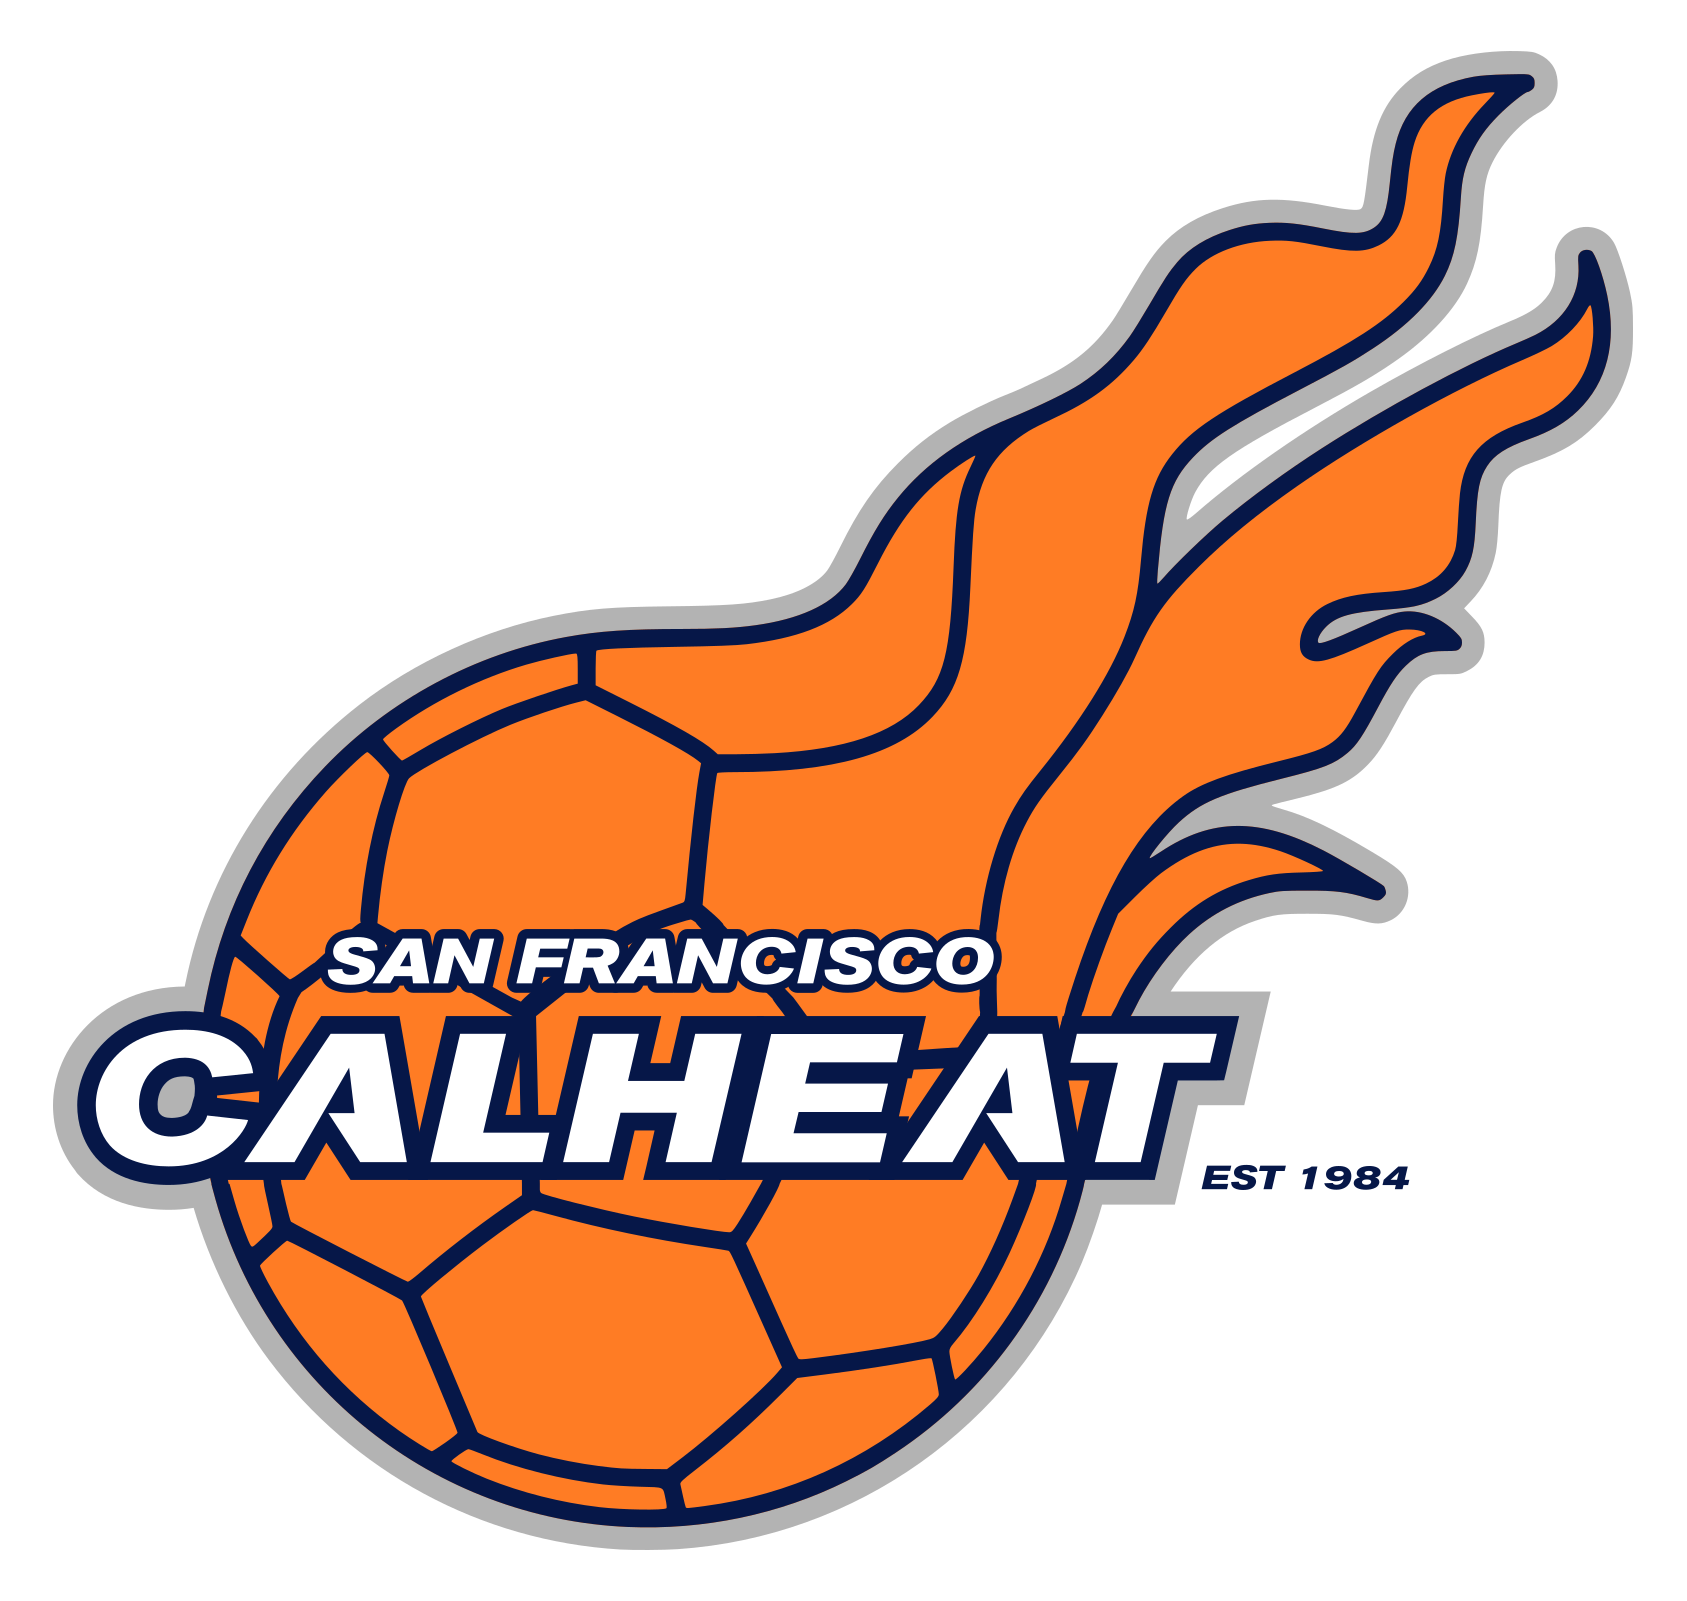 Calheat_logo-new-color-sharp-edge.png